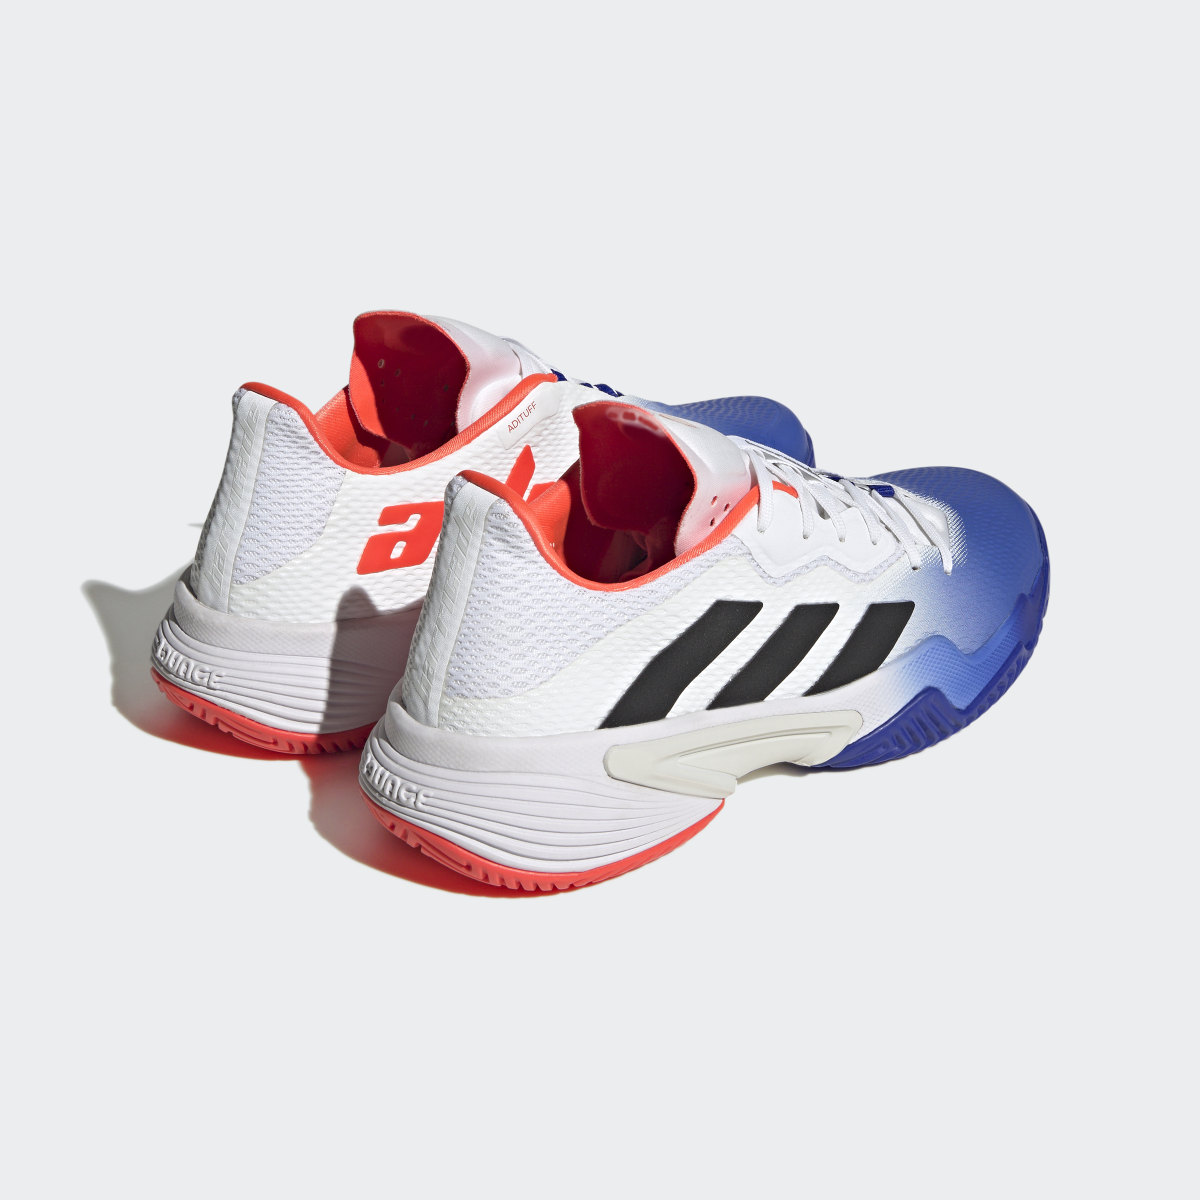 Adidas Barricade Tennis Shoes. 12